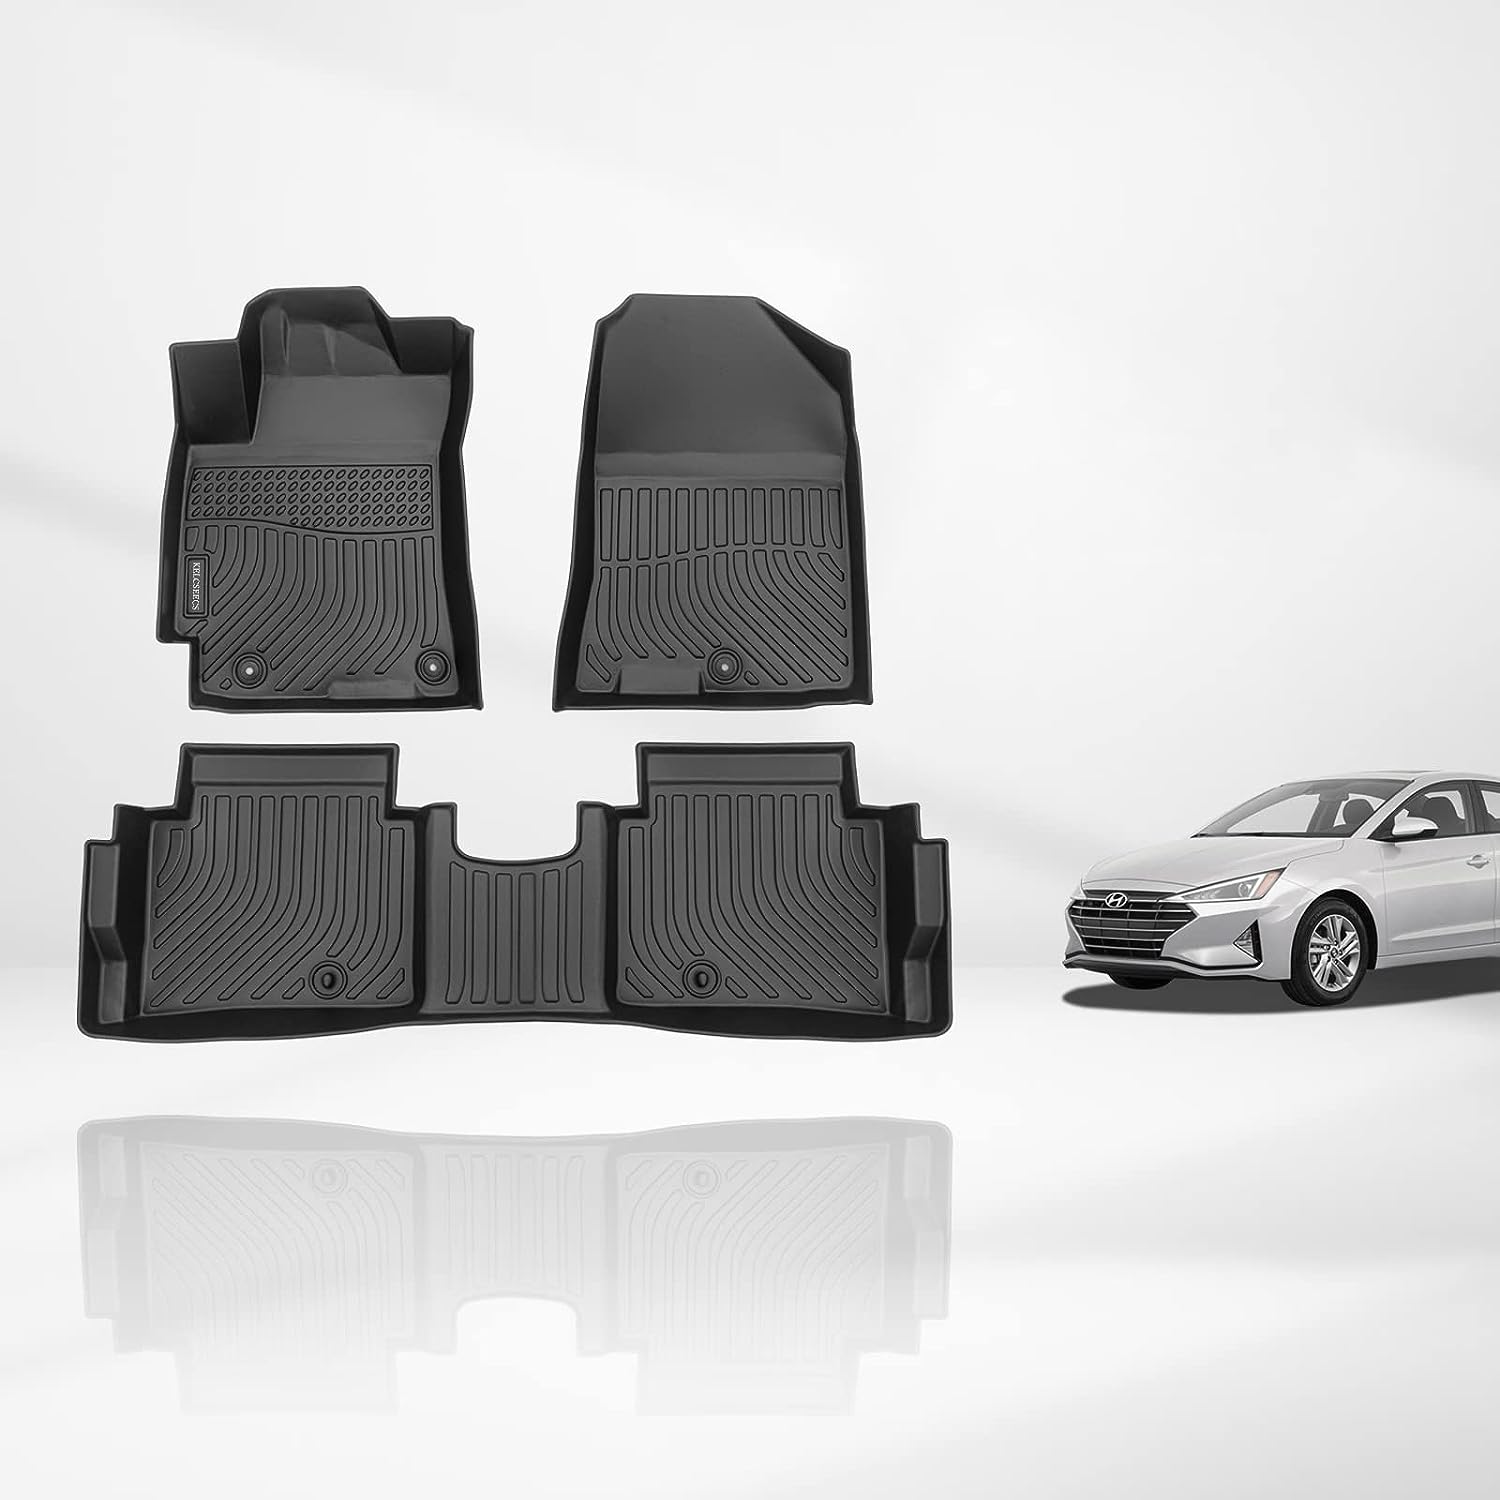 Kelcseecs All Weather 3D Tech Design TPE Car Floor Mats Floor Liners For Hyundai Elantra 2017-2020